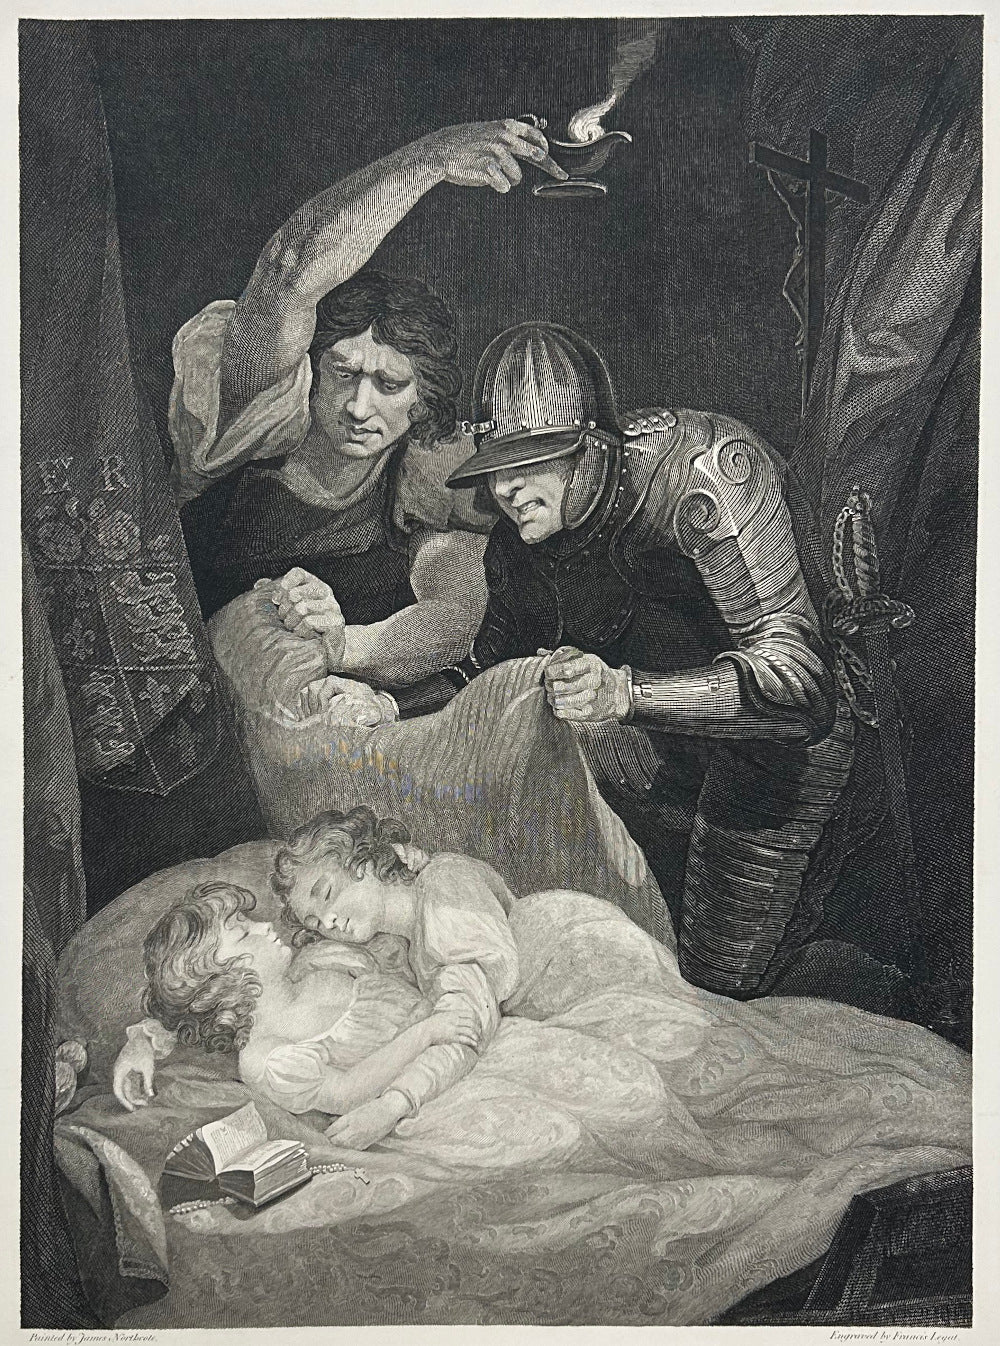 Northcote, James Plate 77. “Richard III, Act III, Scene ii. The Murder of the Princes in the Tower